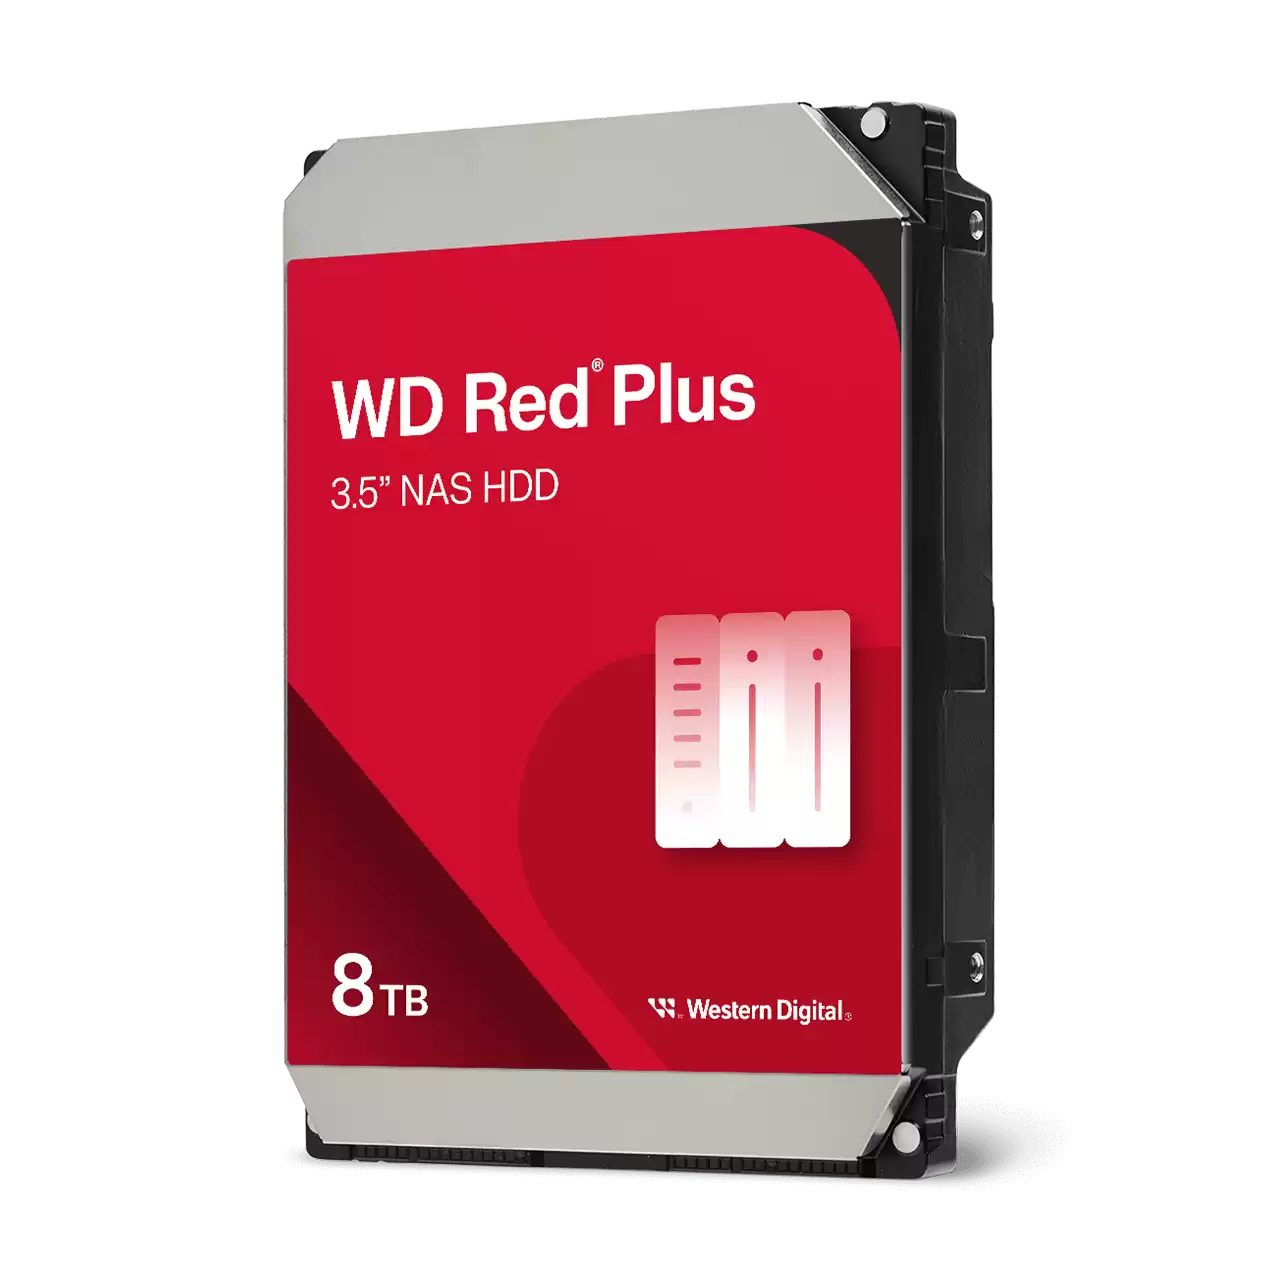 WD Red Plus 8TB NAS Hard Drive - 5400 RPM Class SATA 6Gb/s, CMR, 128MB Cache, 3.5 Inch - WD80EFPX